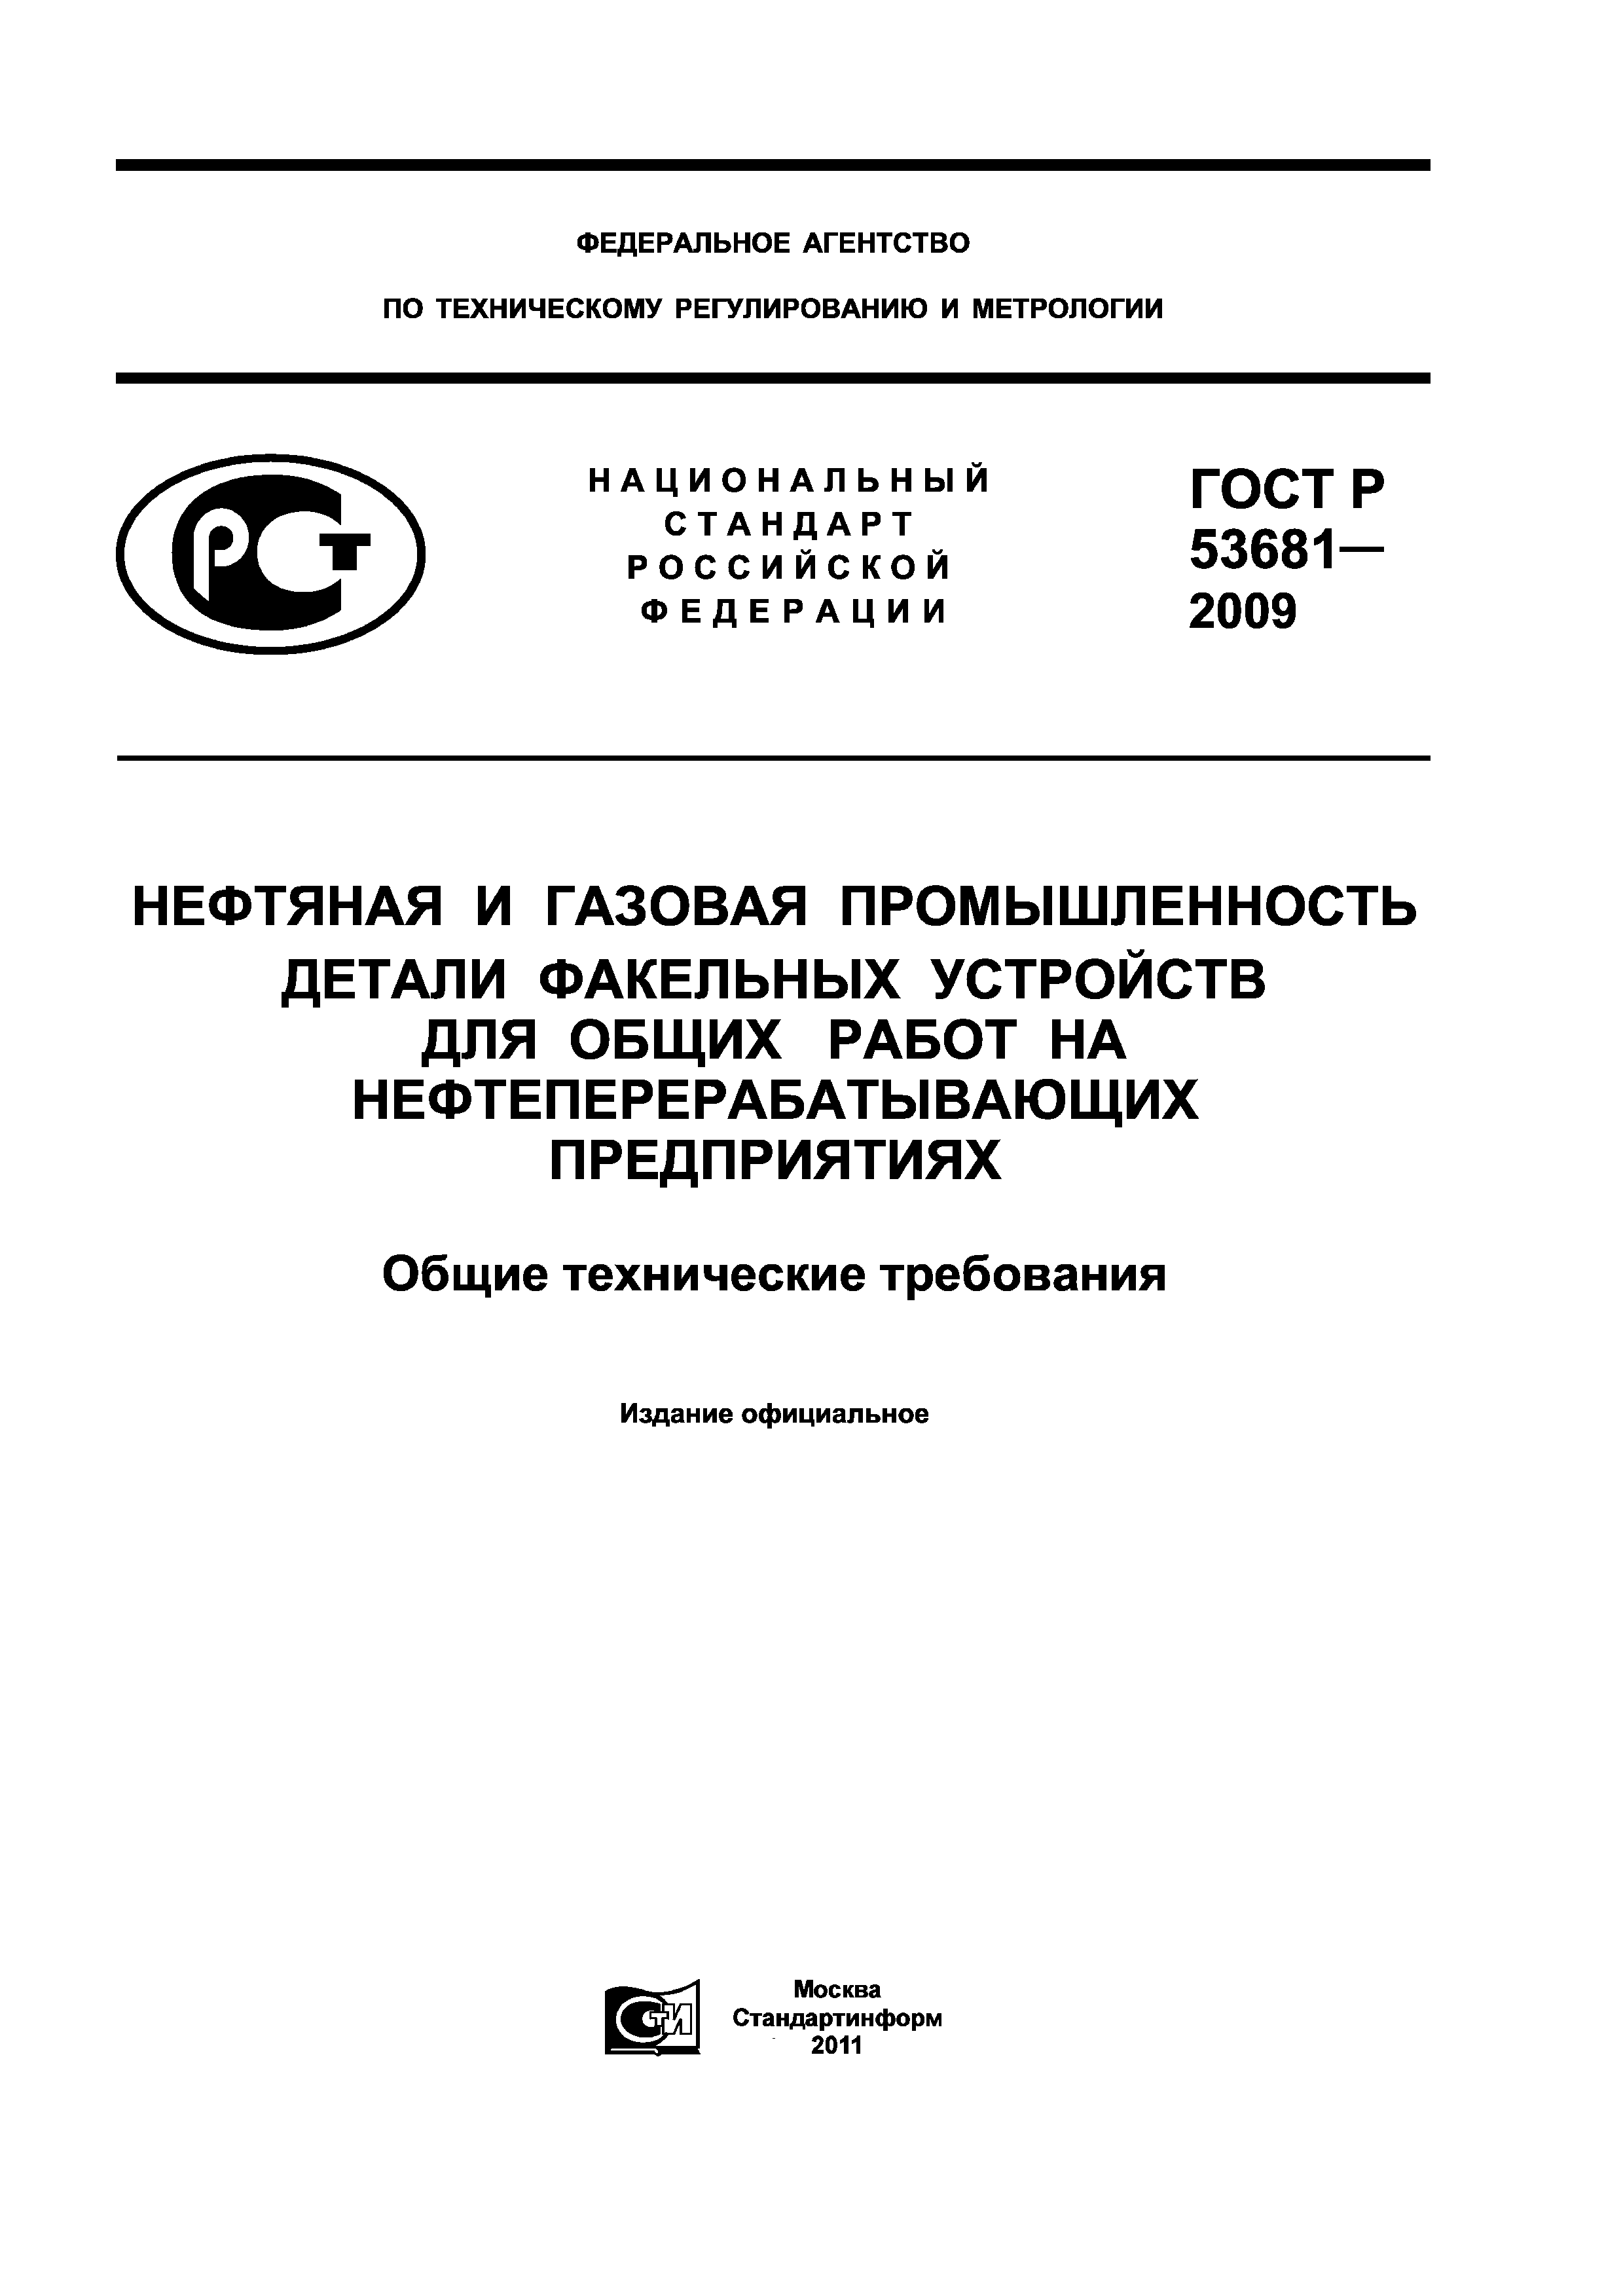 ГОСТ Р 53681-2009